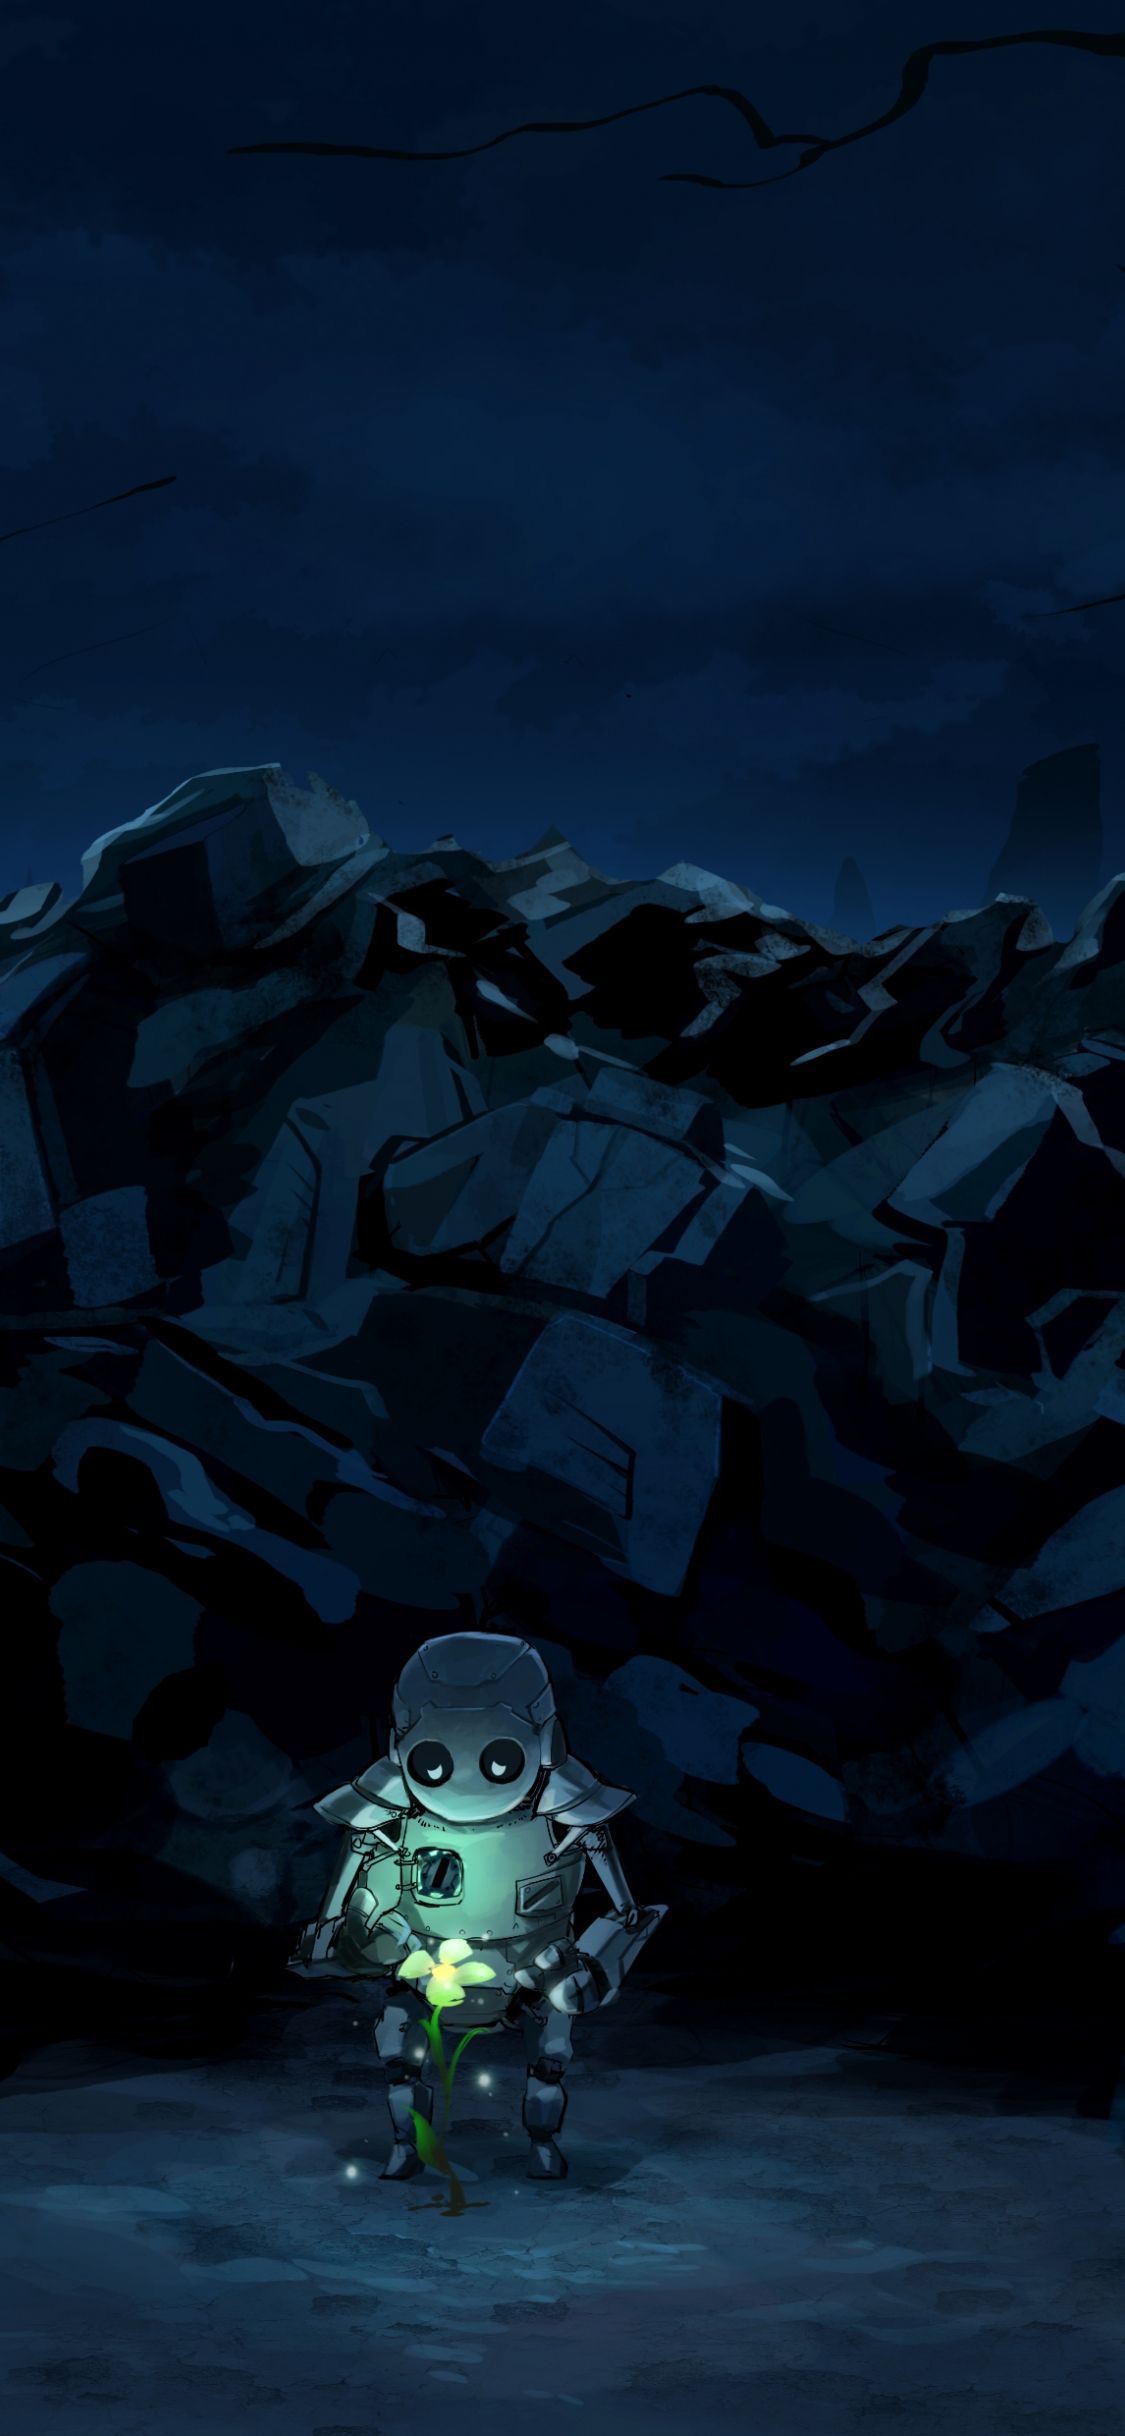 Free download Dark Anime Scenery Wallpaper Desktop Background As